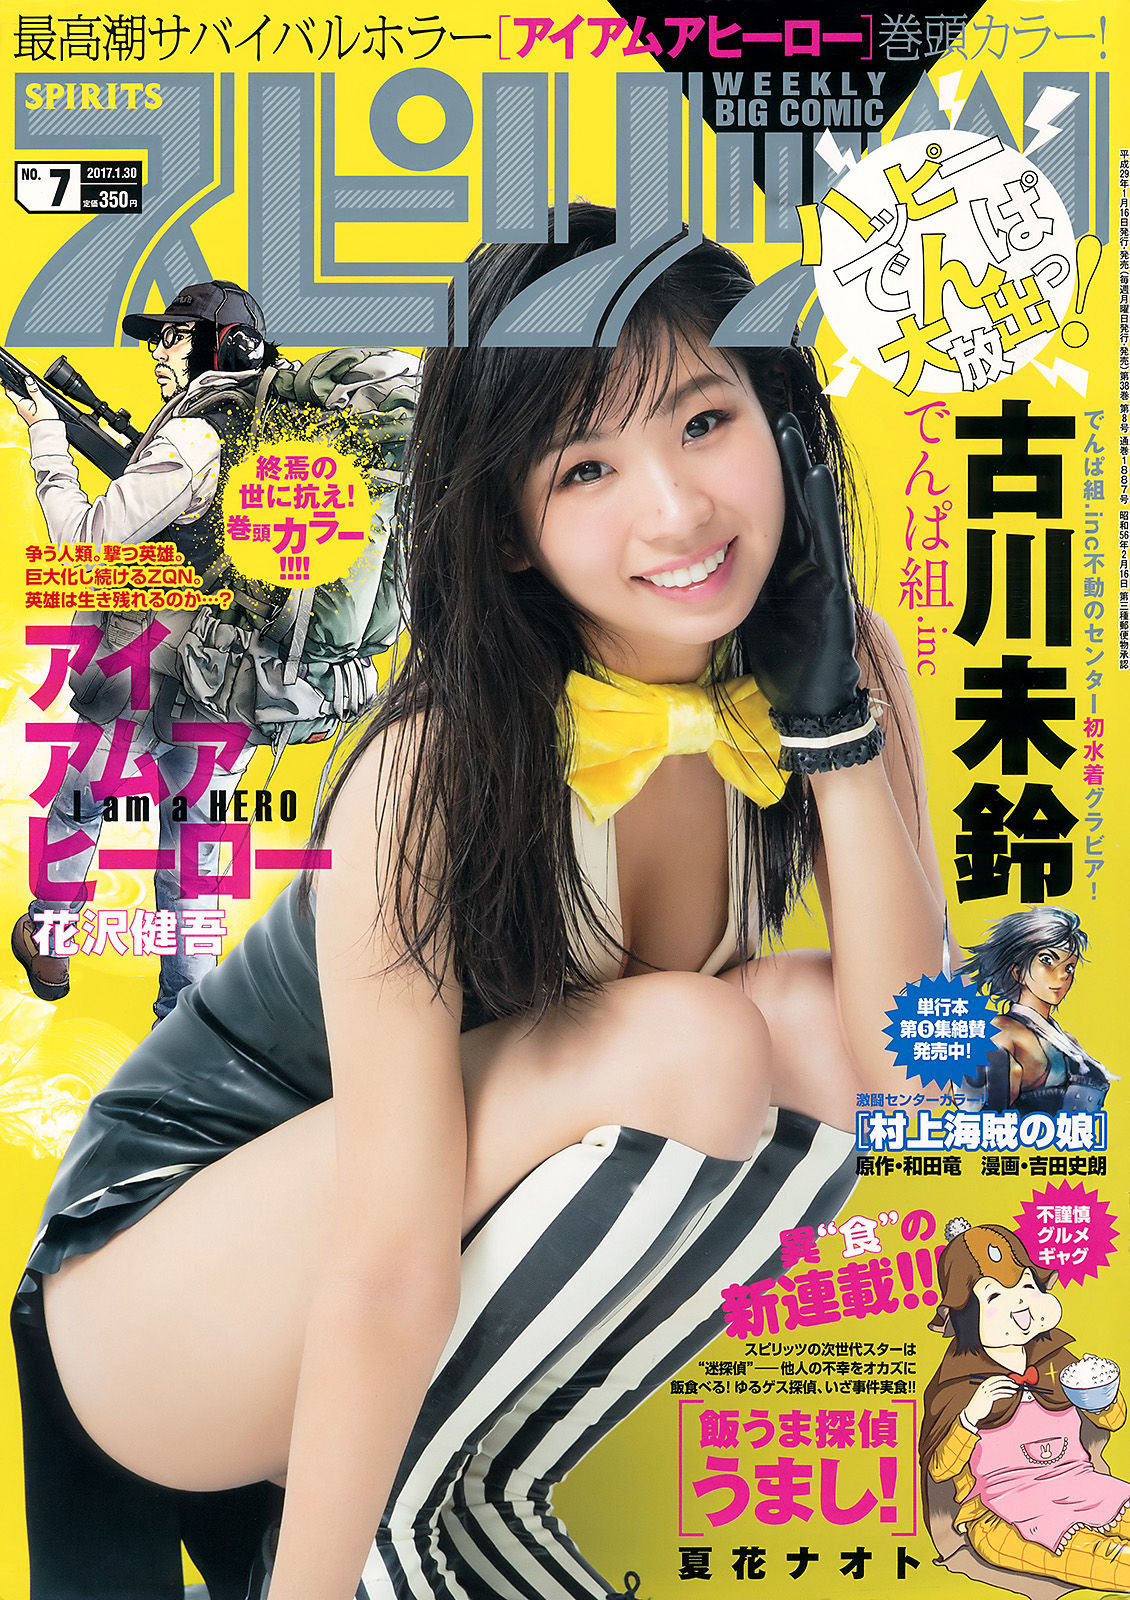 [Weekly Big Comic Spirits]日本少女:古川未铃高品质私家拍摄作品在线浏览(8P)